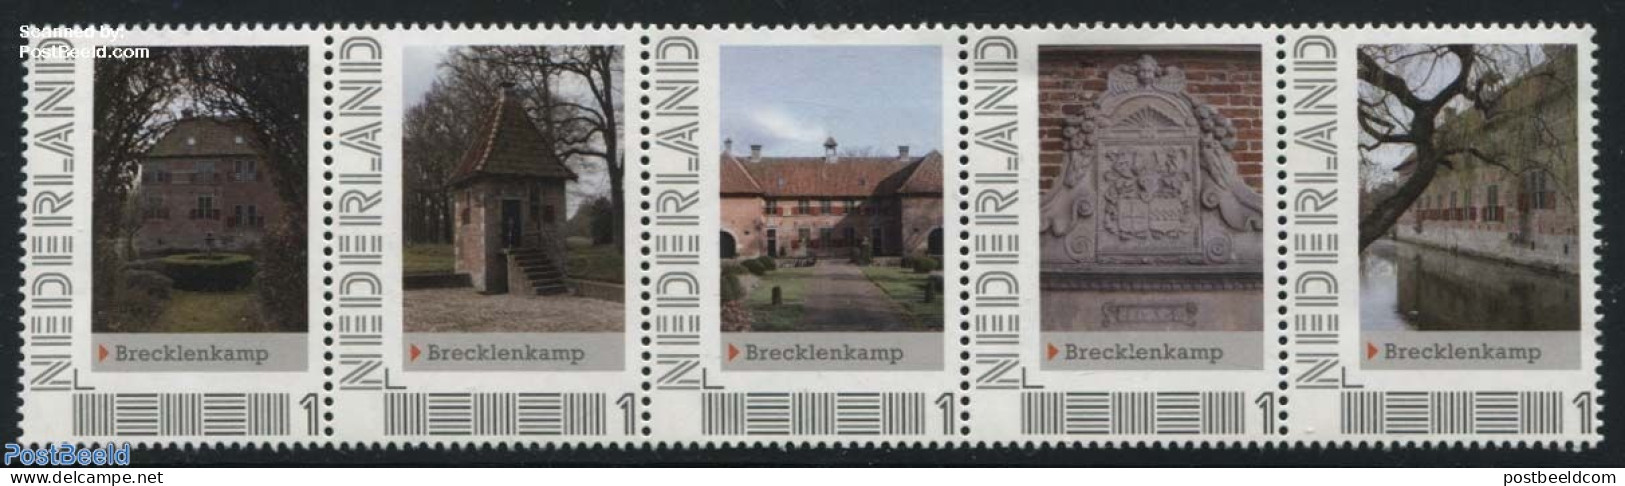 Netherlands - Personal Stamps TNT/PNL 2012 Brecklenkamp 5v [::::], Mint NH, Castles & Fortifications - Châteaux